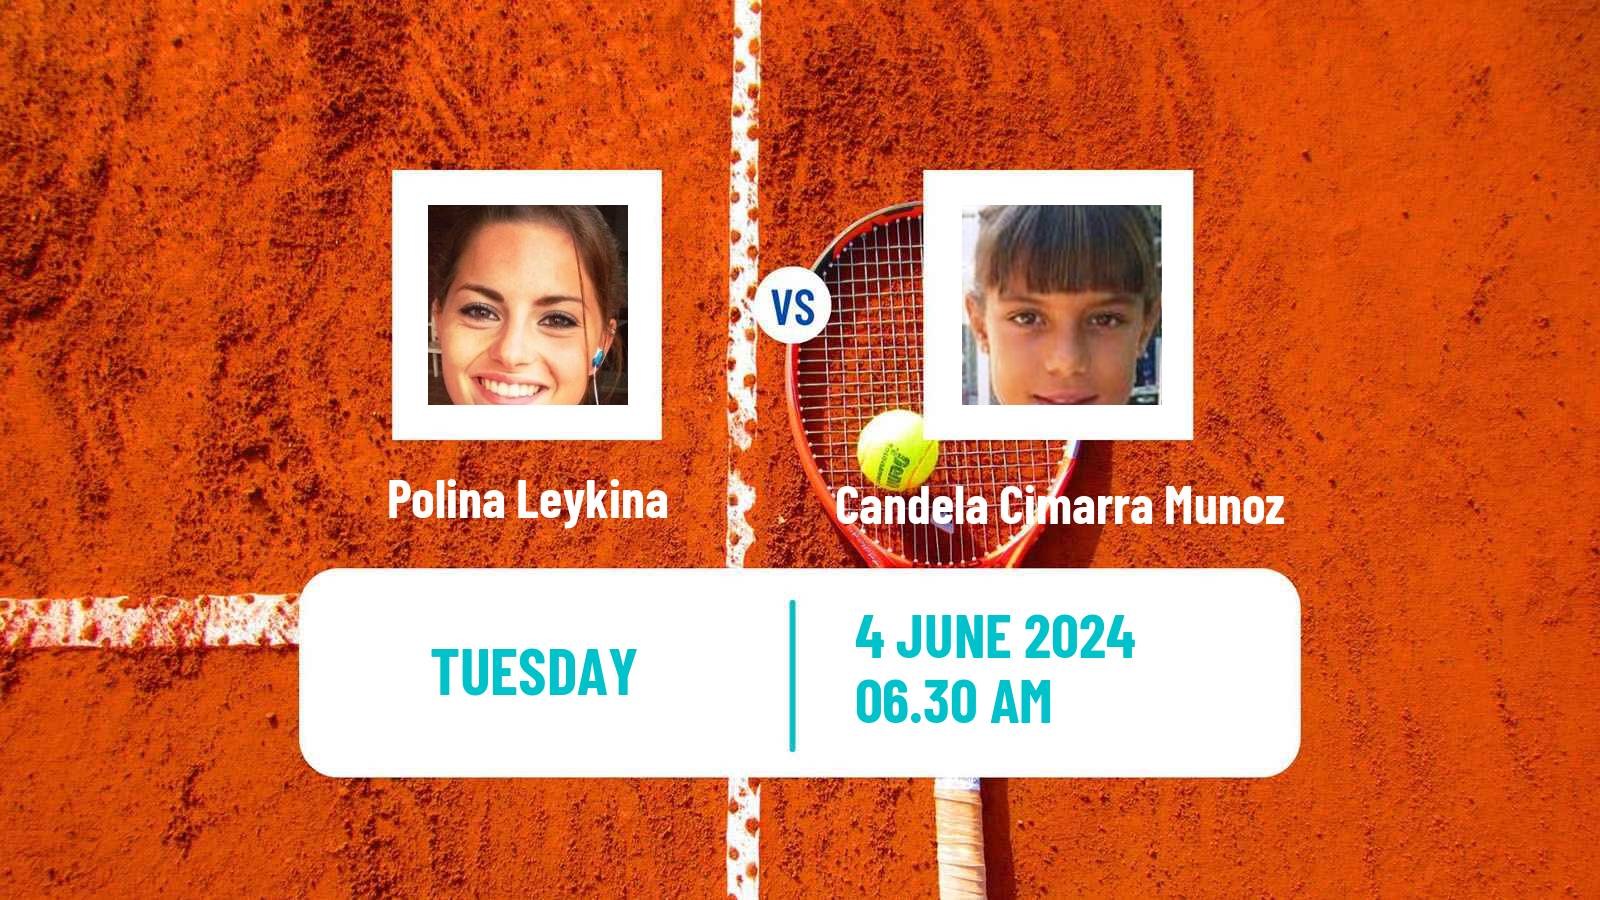 Tennis ITF W15 Madrid Women Polina Leykina - Candela Cimarra Munoz